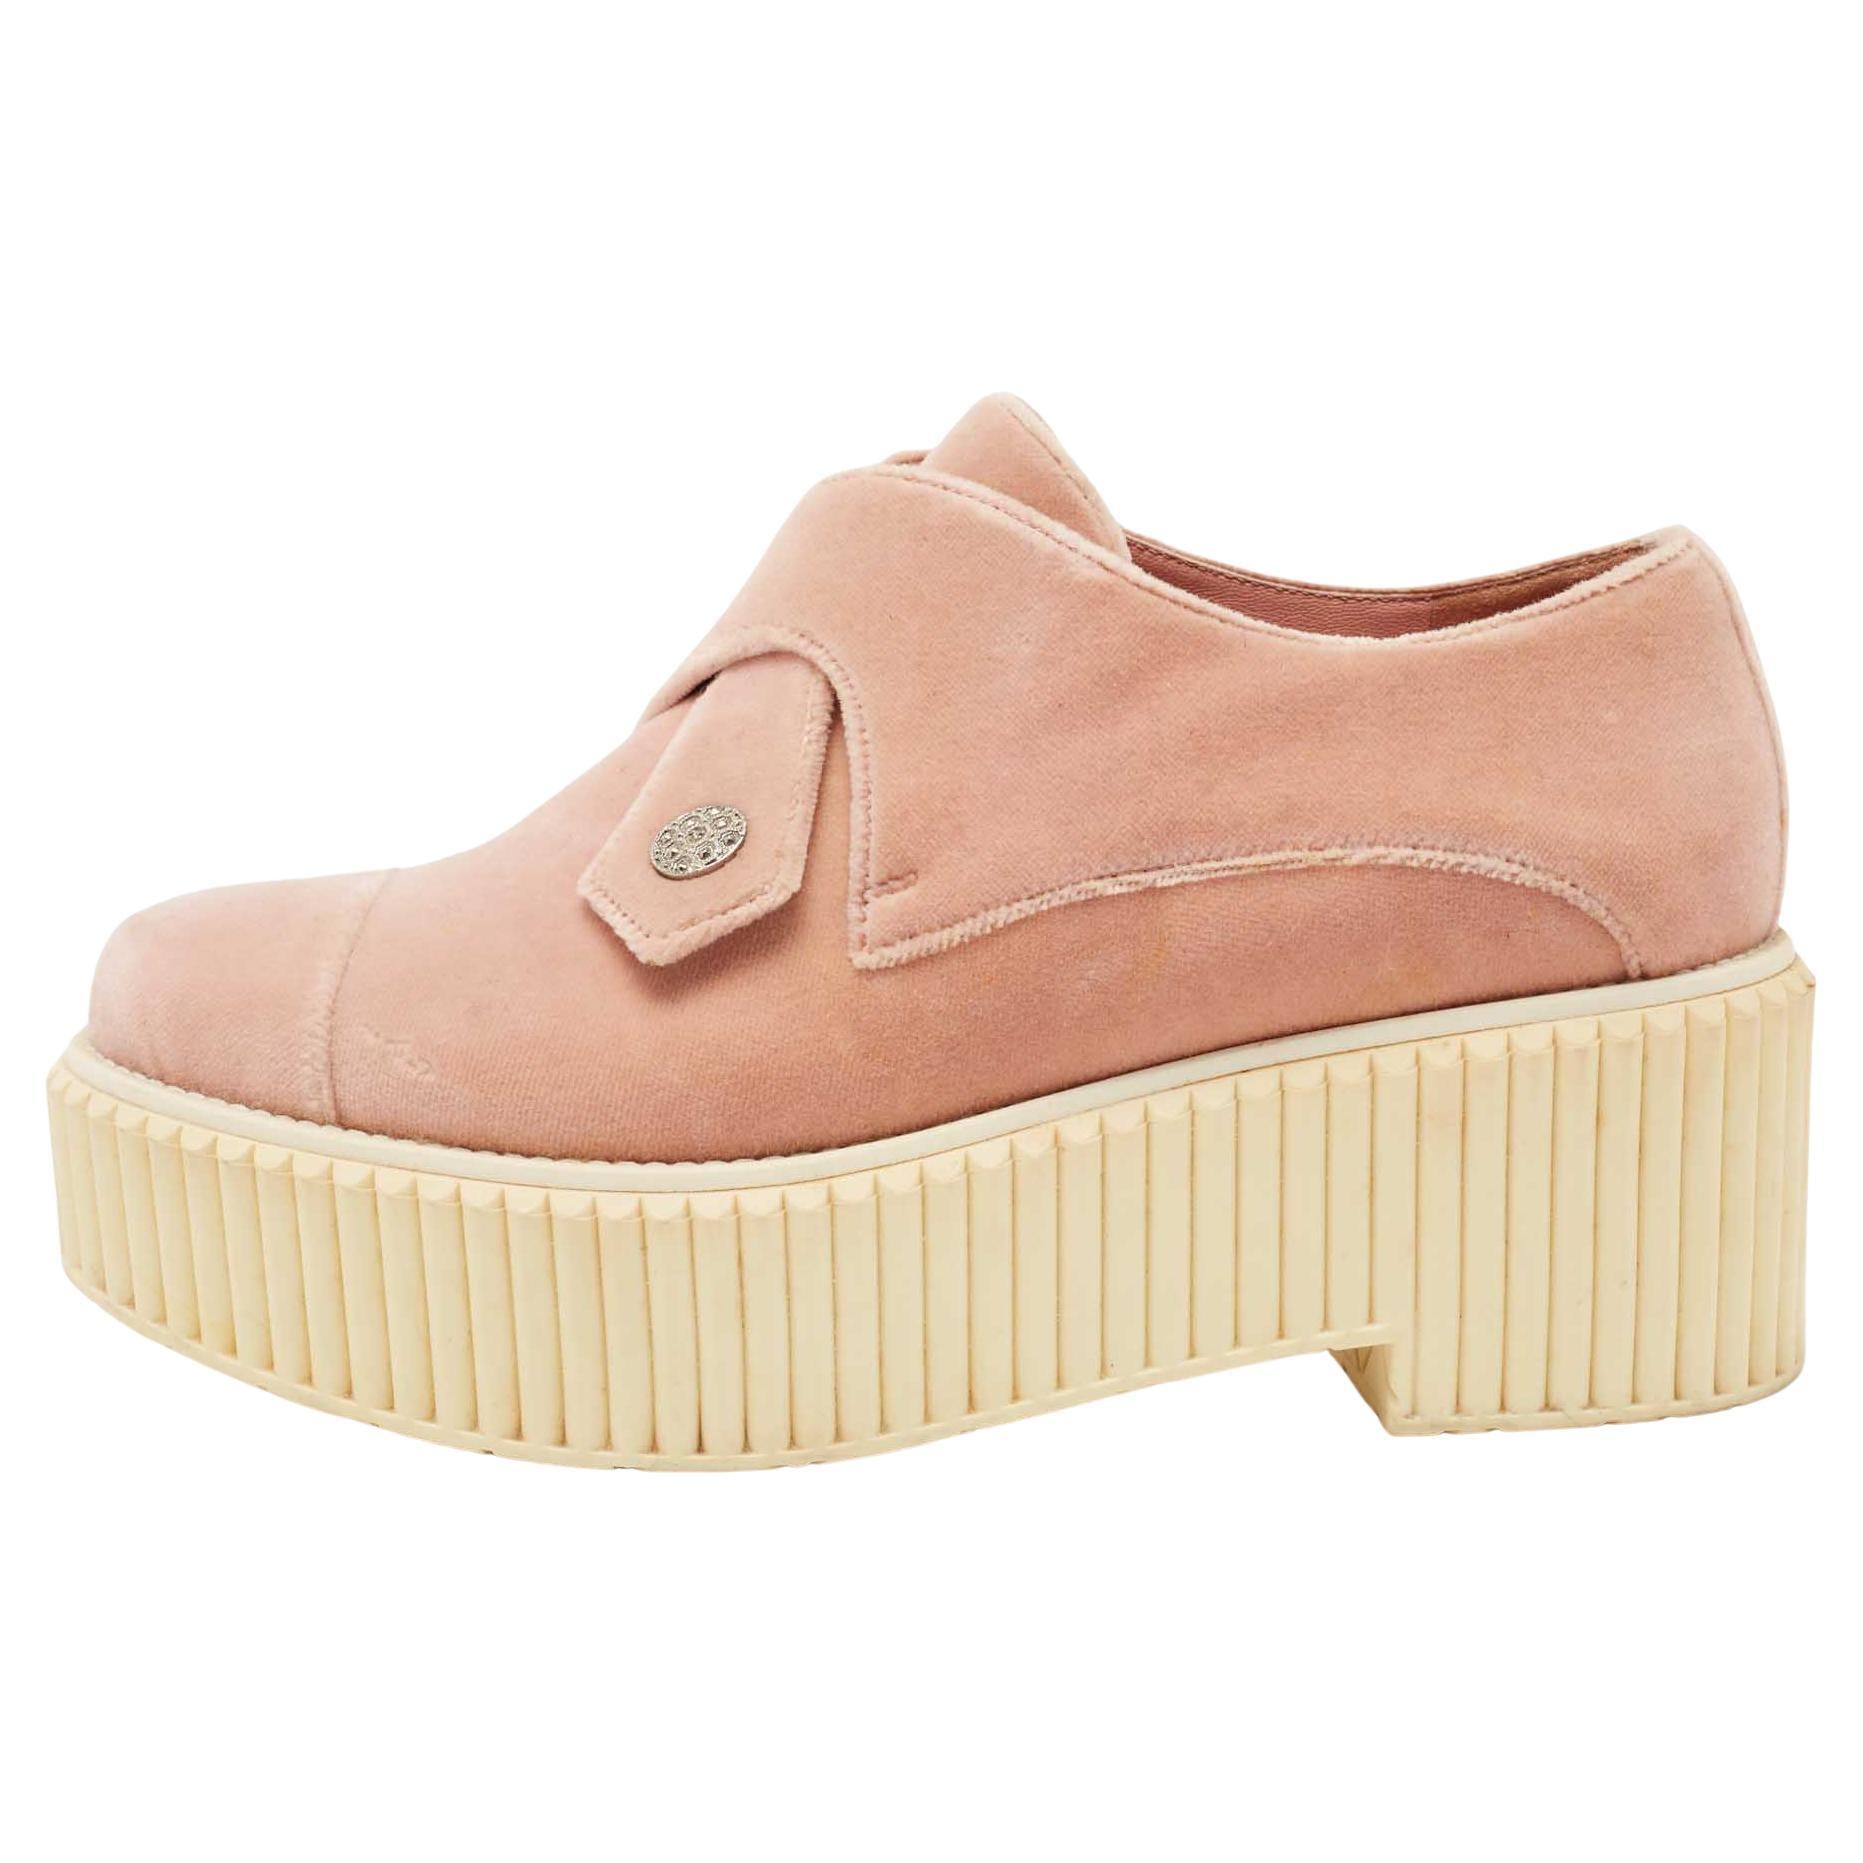 CHANEL Pink Velvet Platform Creepers Sneaker Shoes Sz 39 Loafers